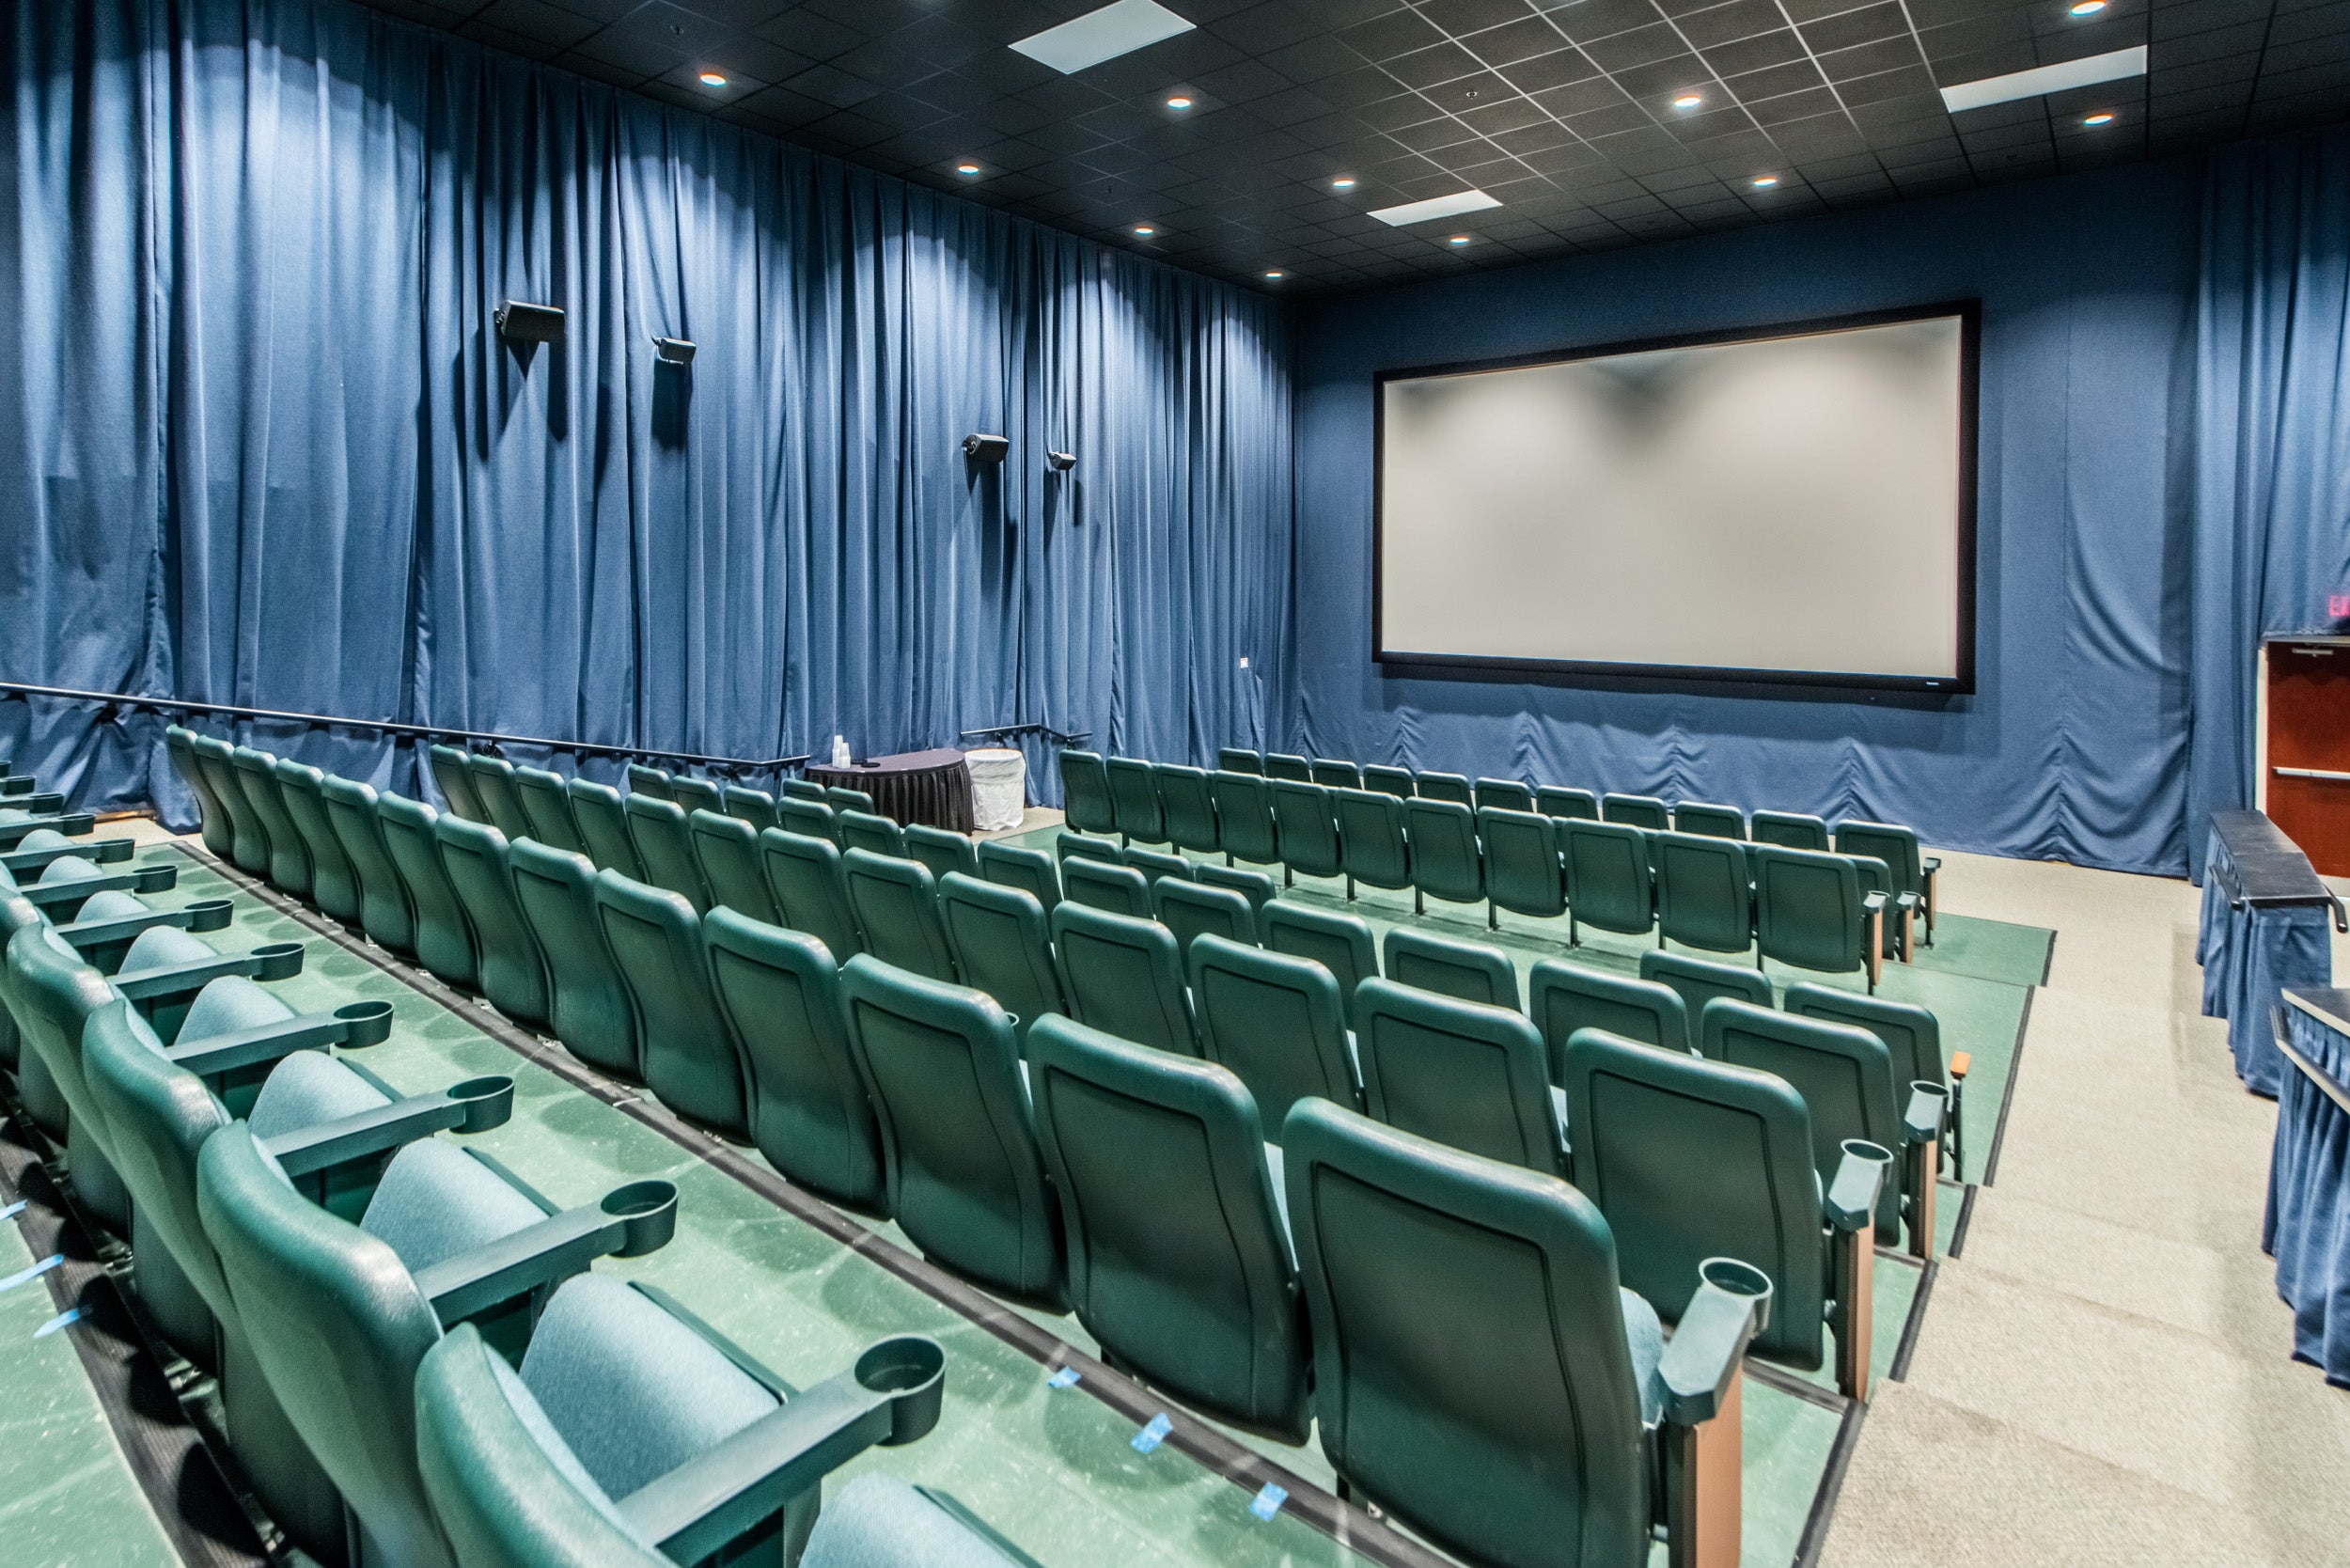 Majestic Movie Theater with stadium seating